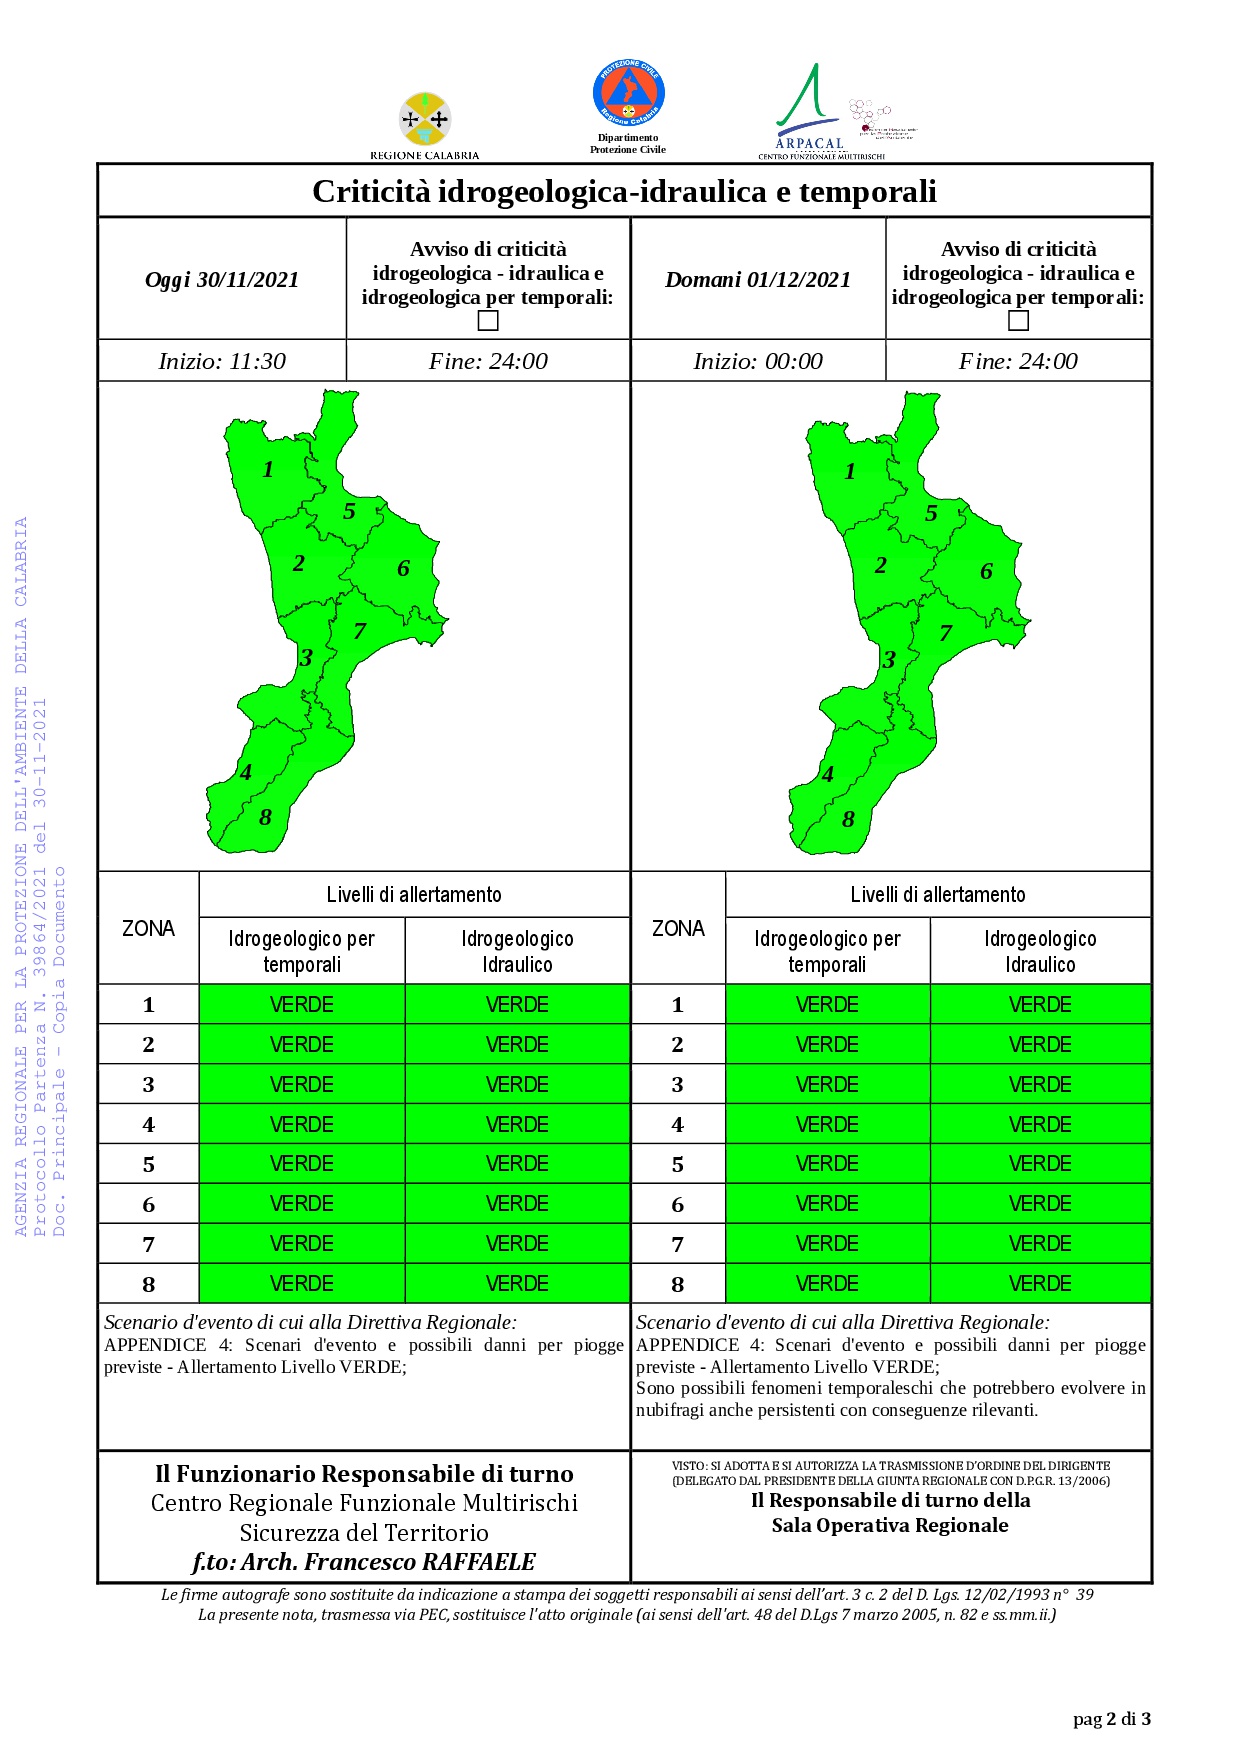 Criticità idrogeologica-idraulica e temporali in Calabria 30-11-2021